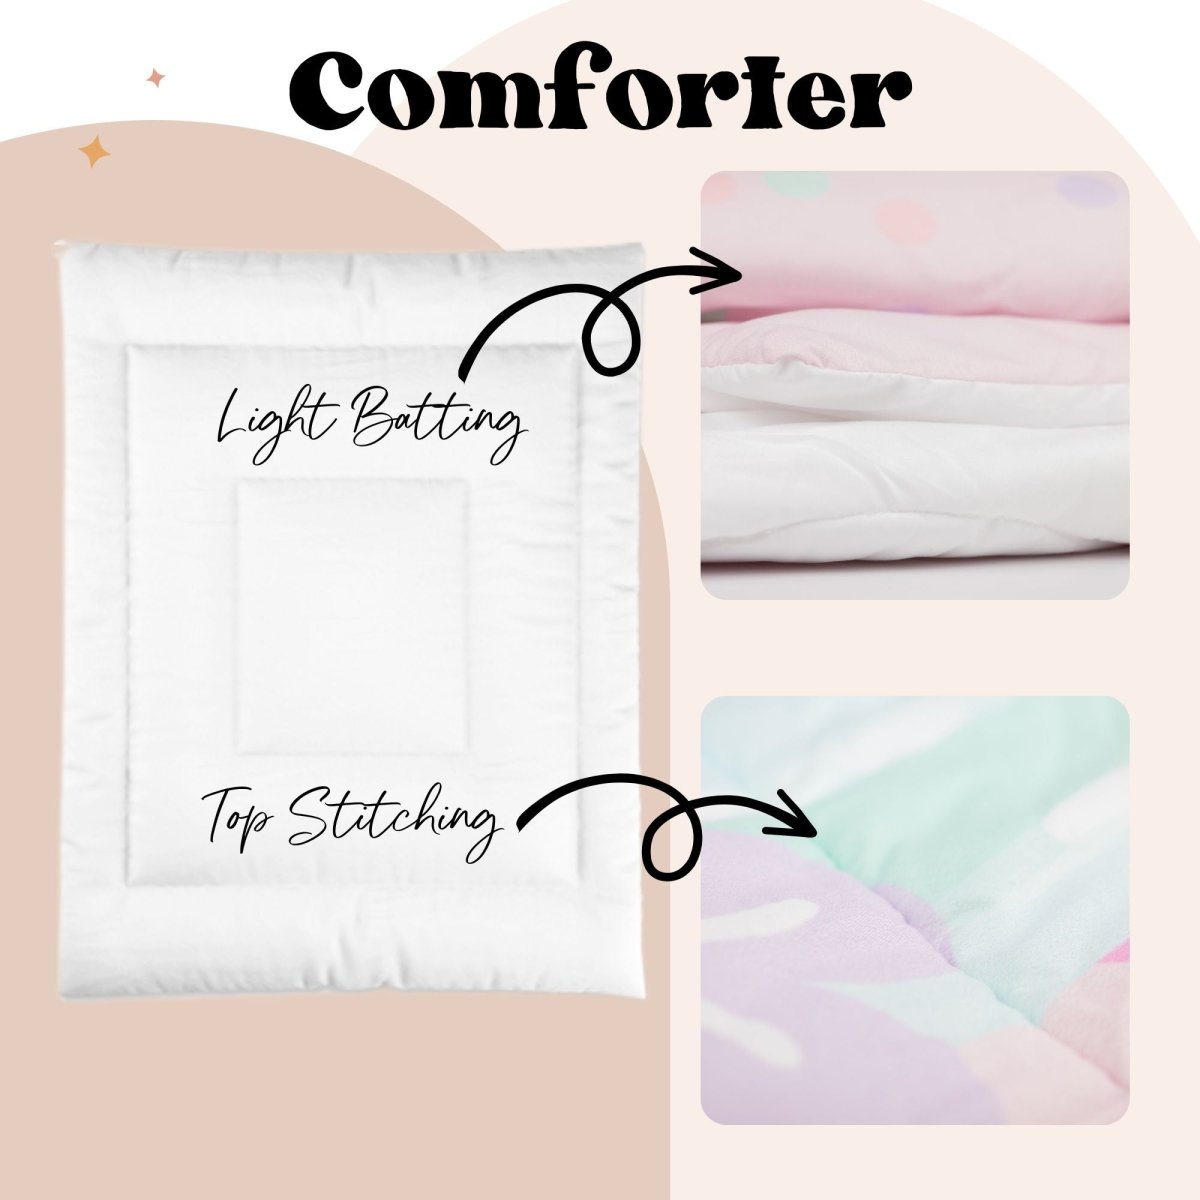 Soft Boho Floral Kids Bedding Set (Comforter or Duvet Cover) - gender_girl, text, Theme_Boho